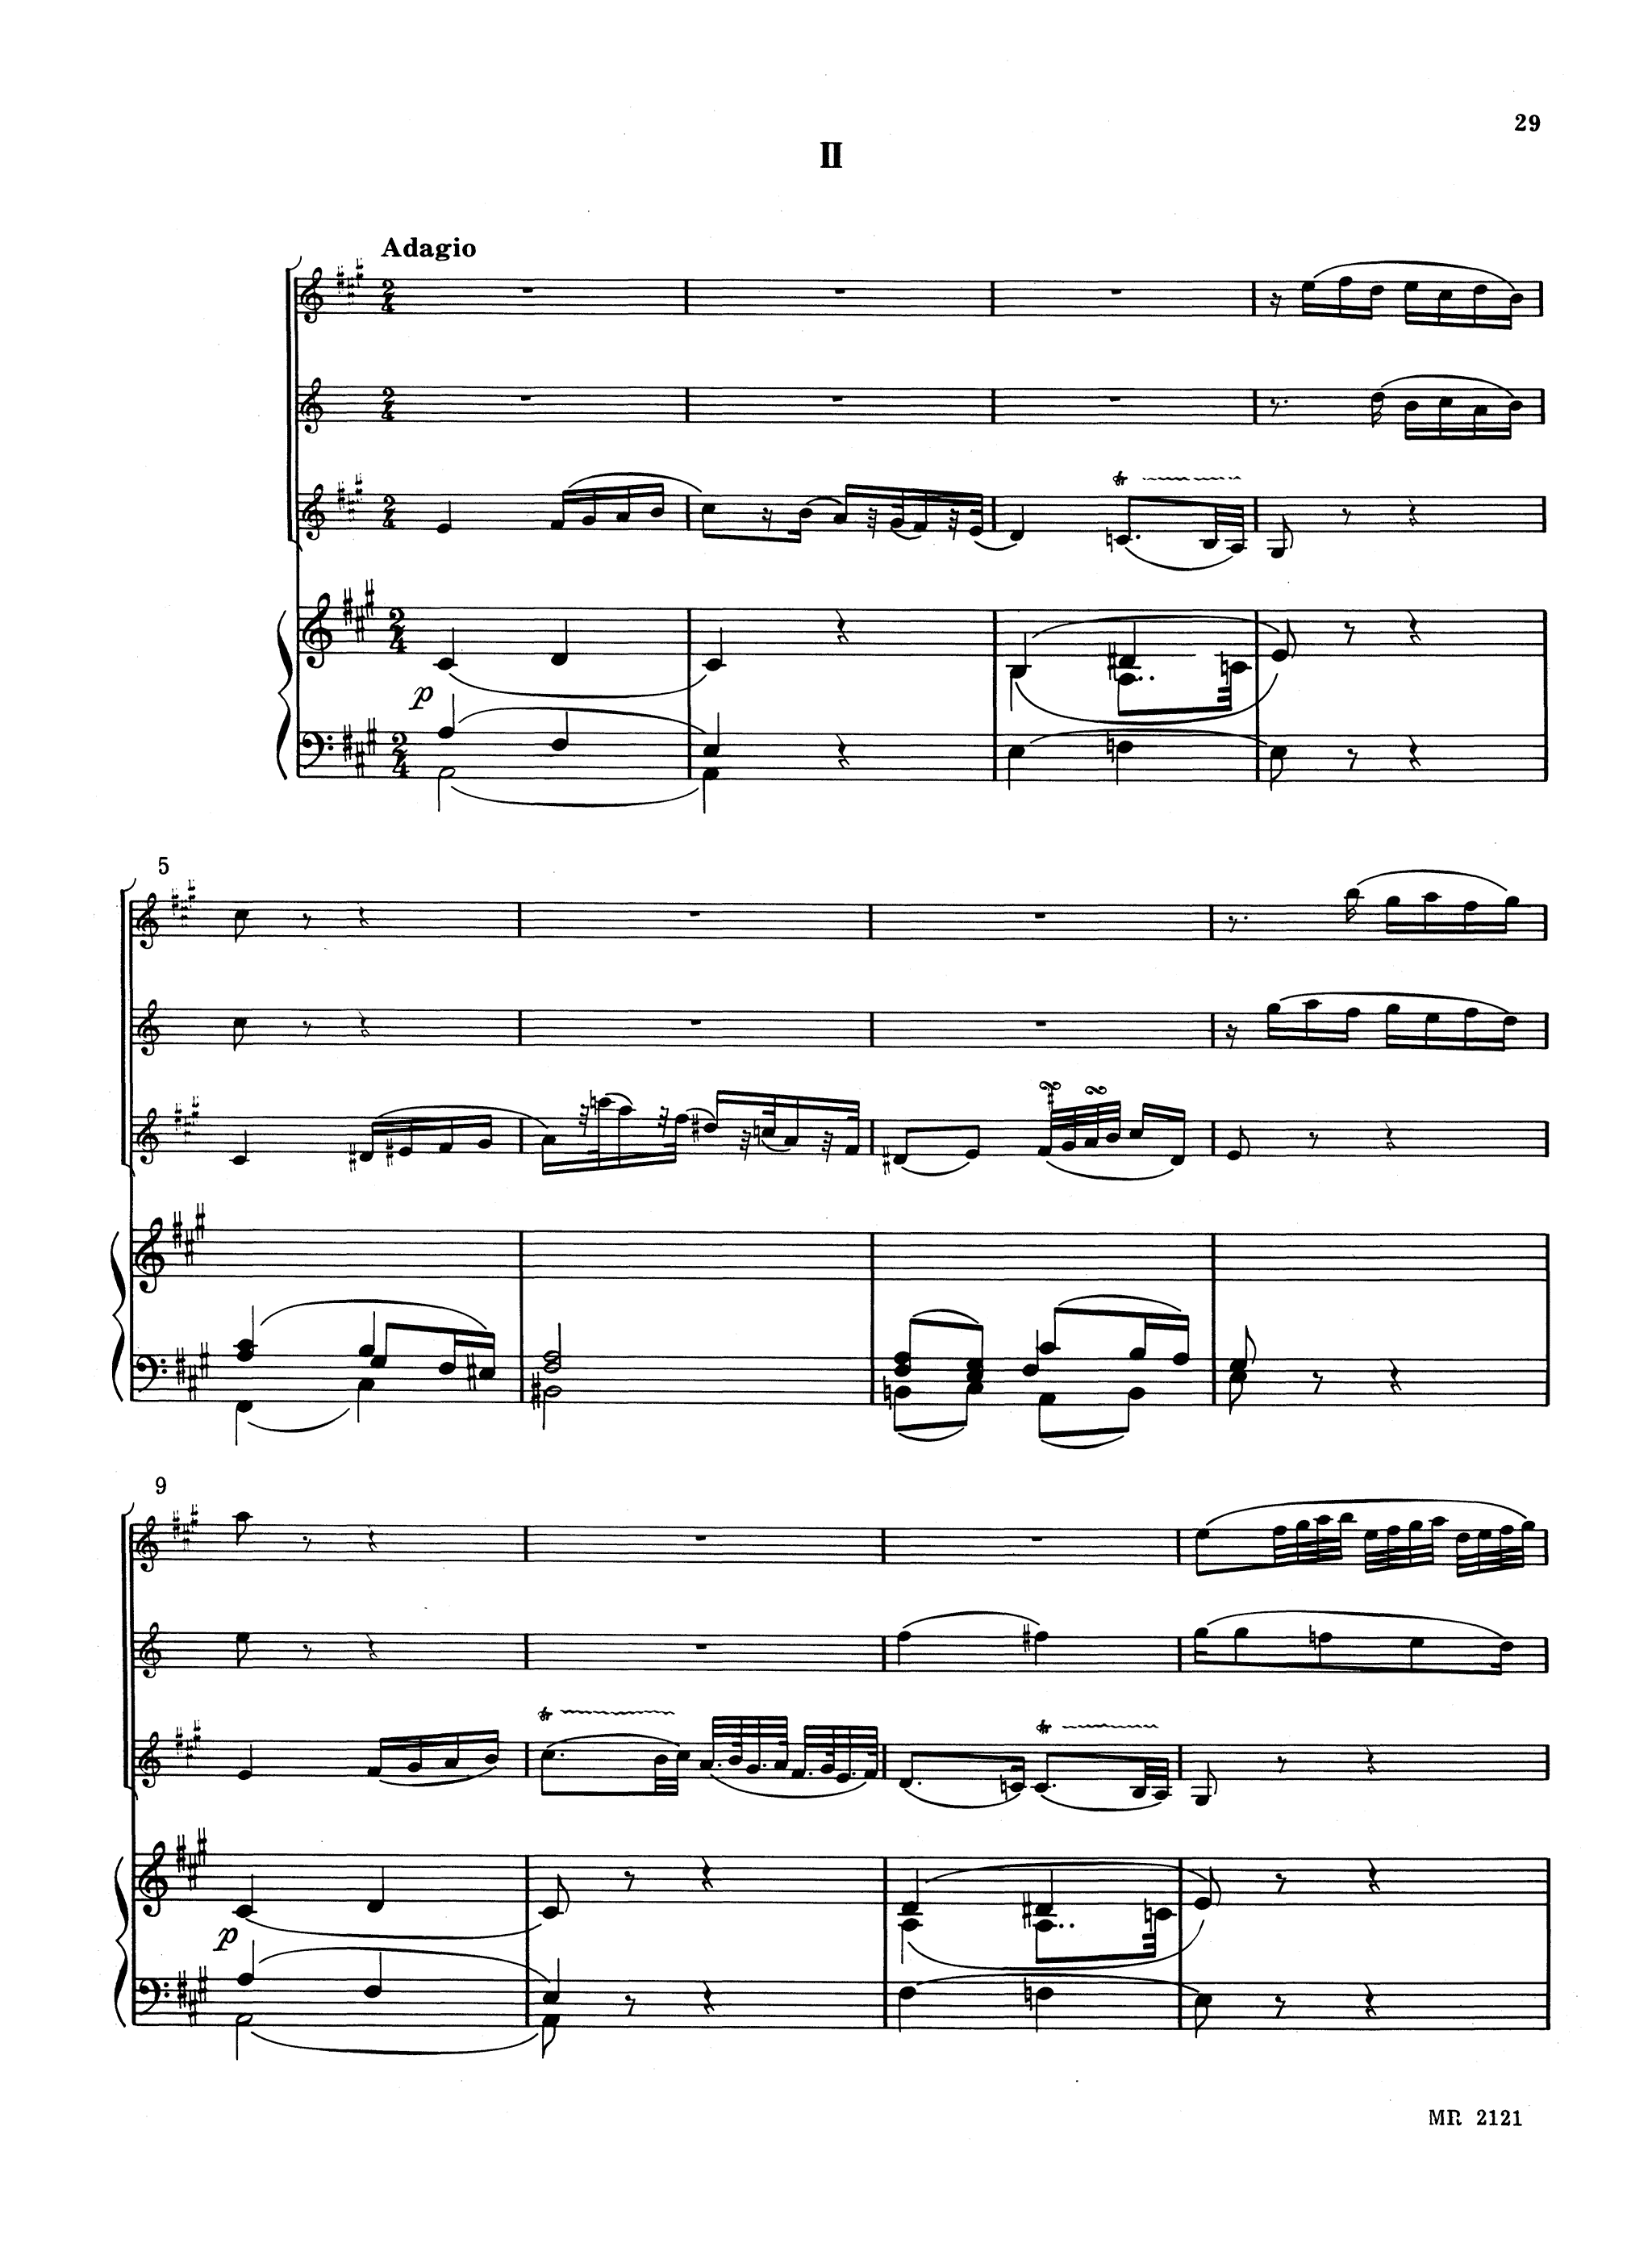 Sinfonia Concertante, Op. 80 - Movement 2